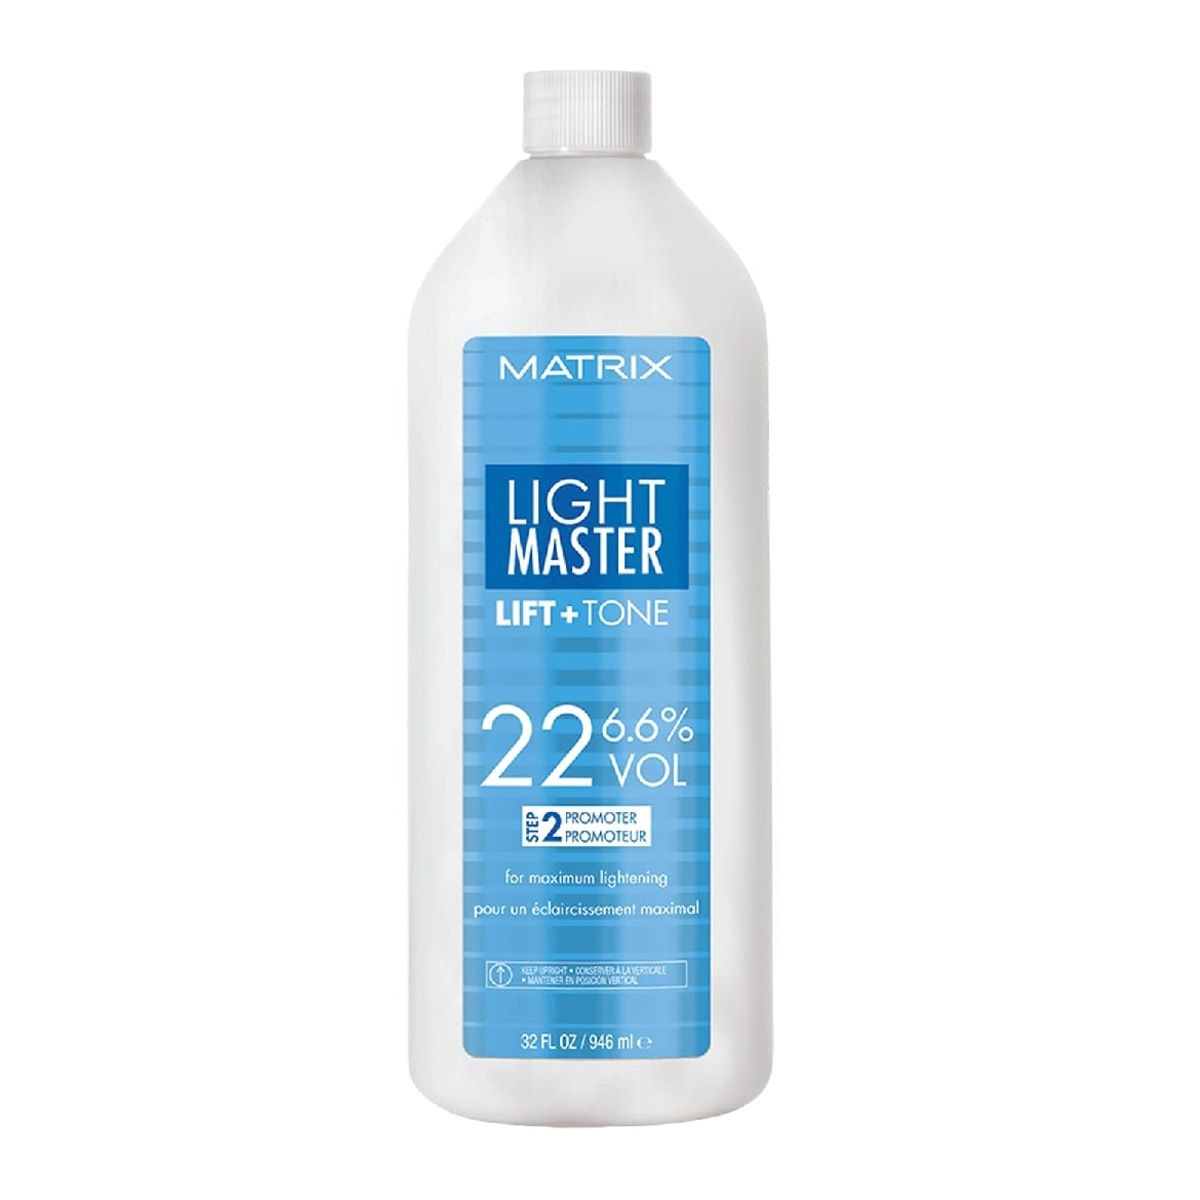 Matrix Light Master Lift + Tone Promoter Oxidant 946 ml-6,6%